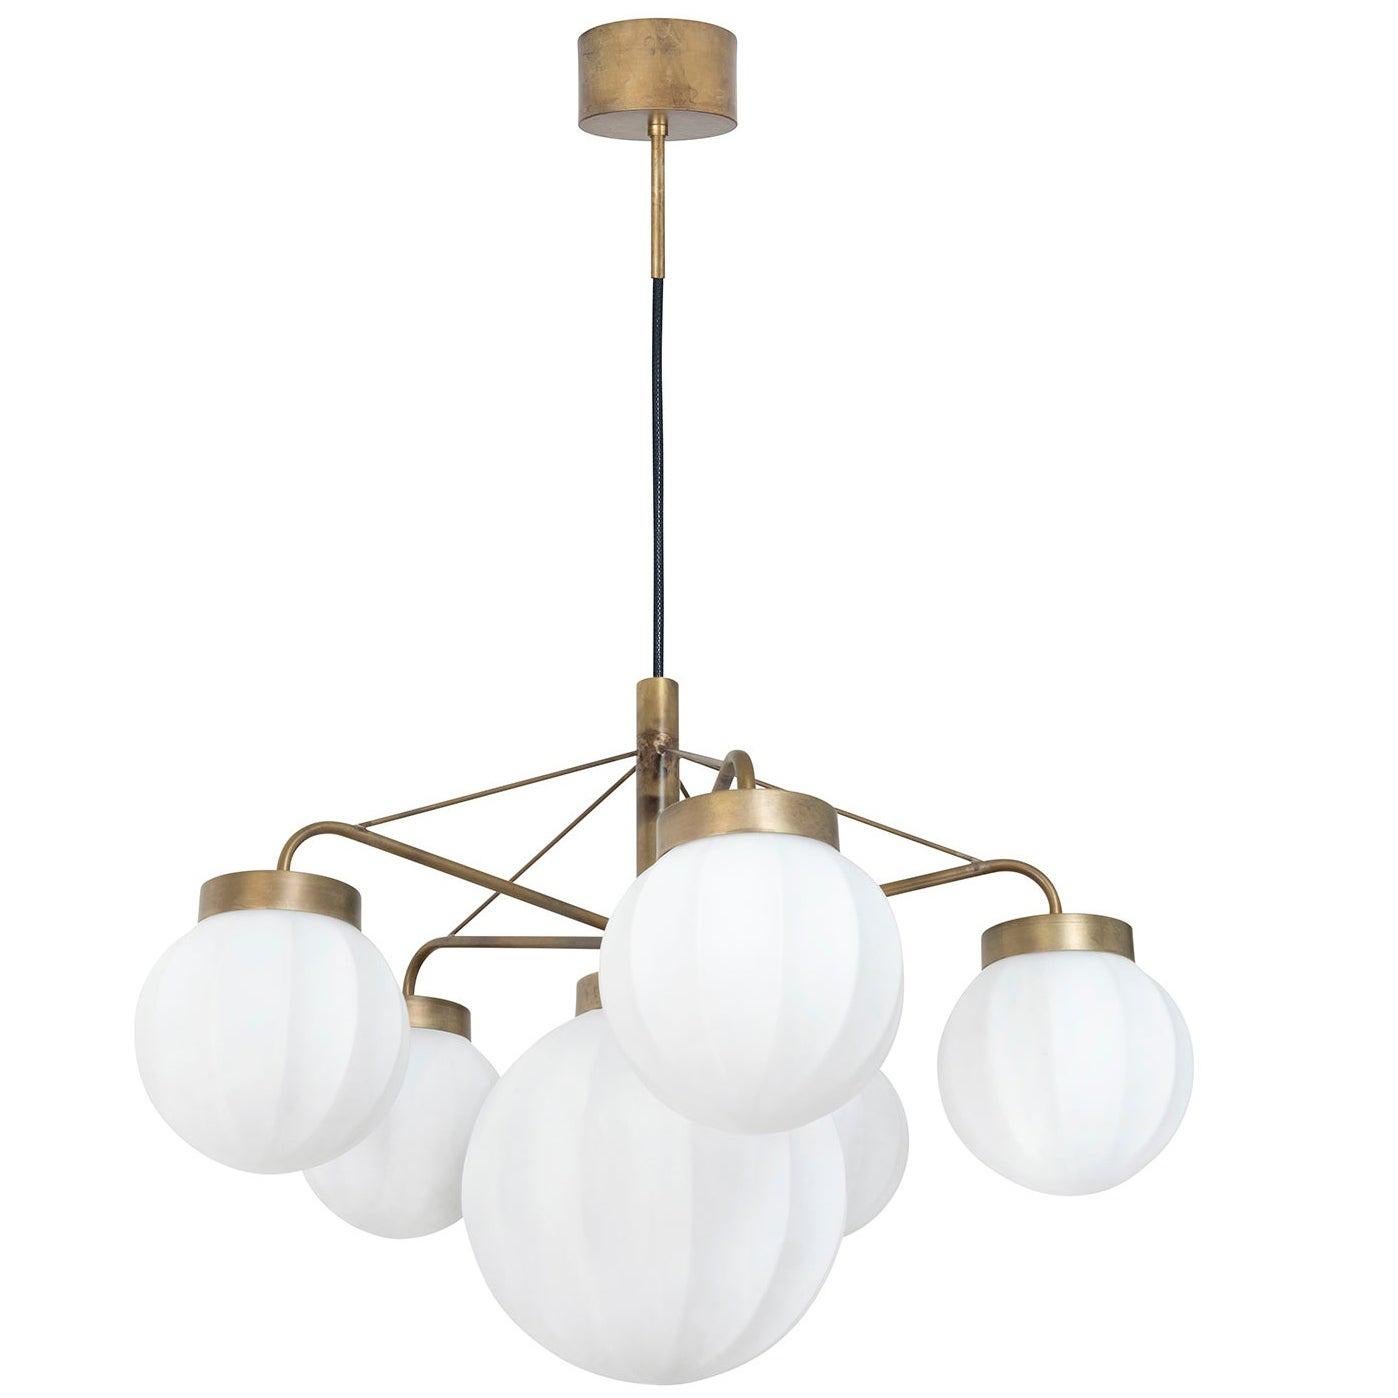 Johan Carpner Klyfta 6L Raw Brass Ceiling Lamp by Konsthantverk For Sale